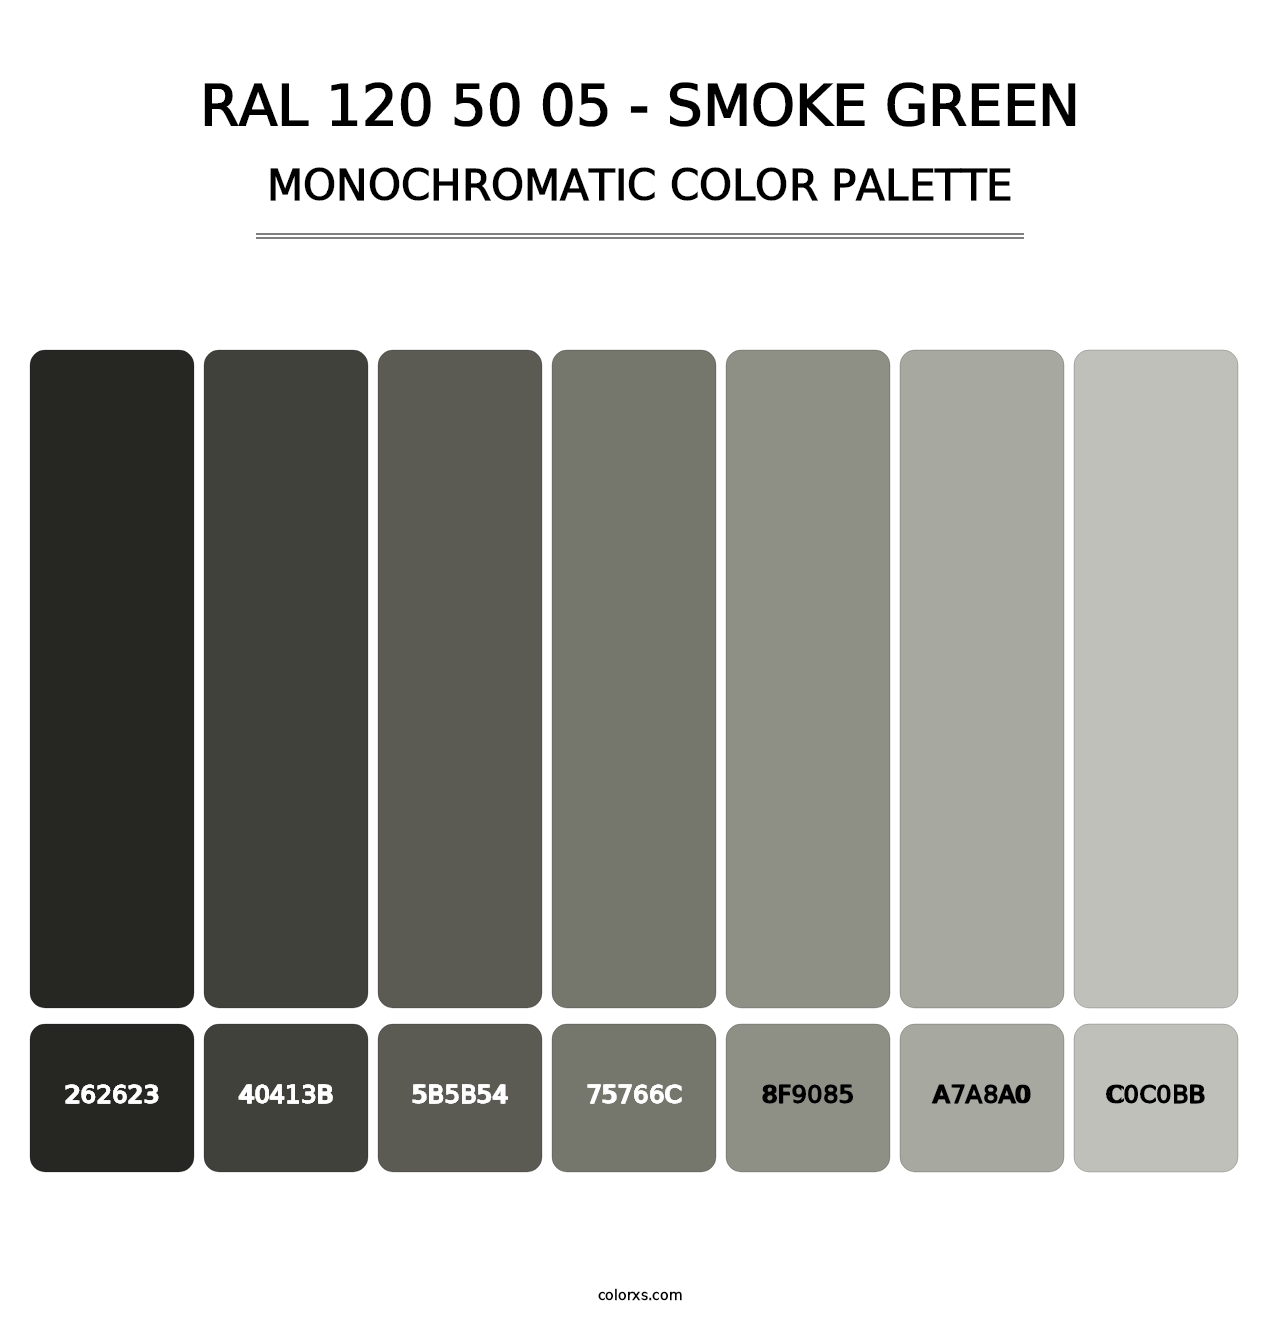 RAL 120 50 05 - Smoke Green - Monochromatic Color Palette